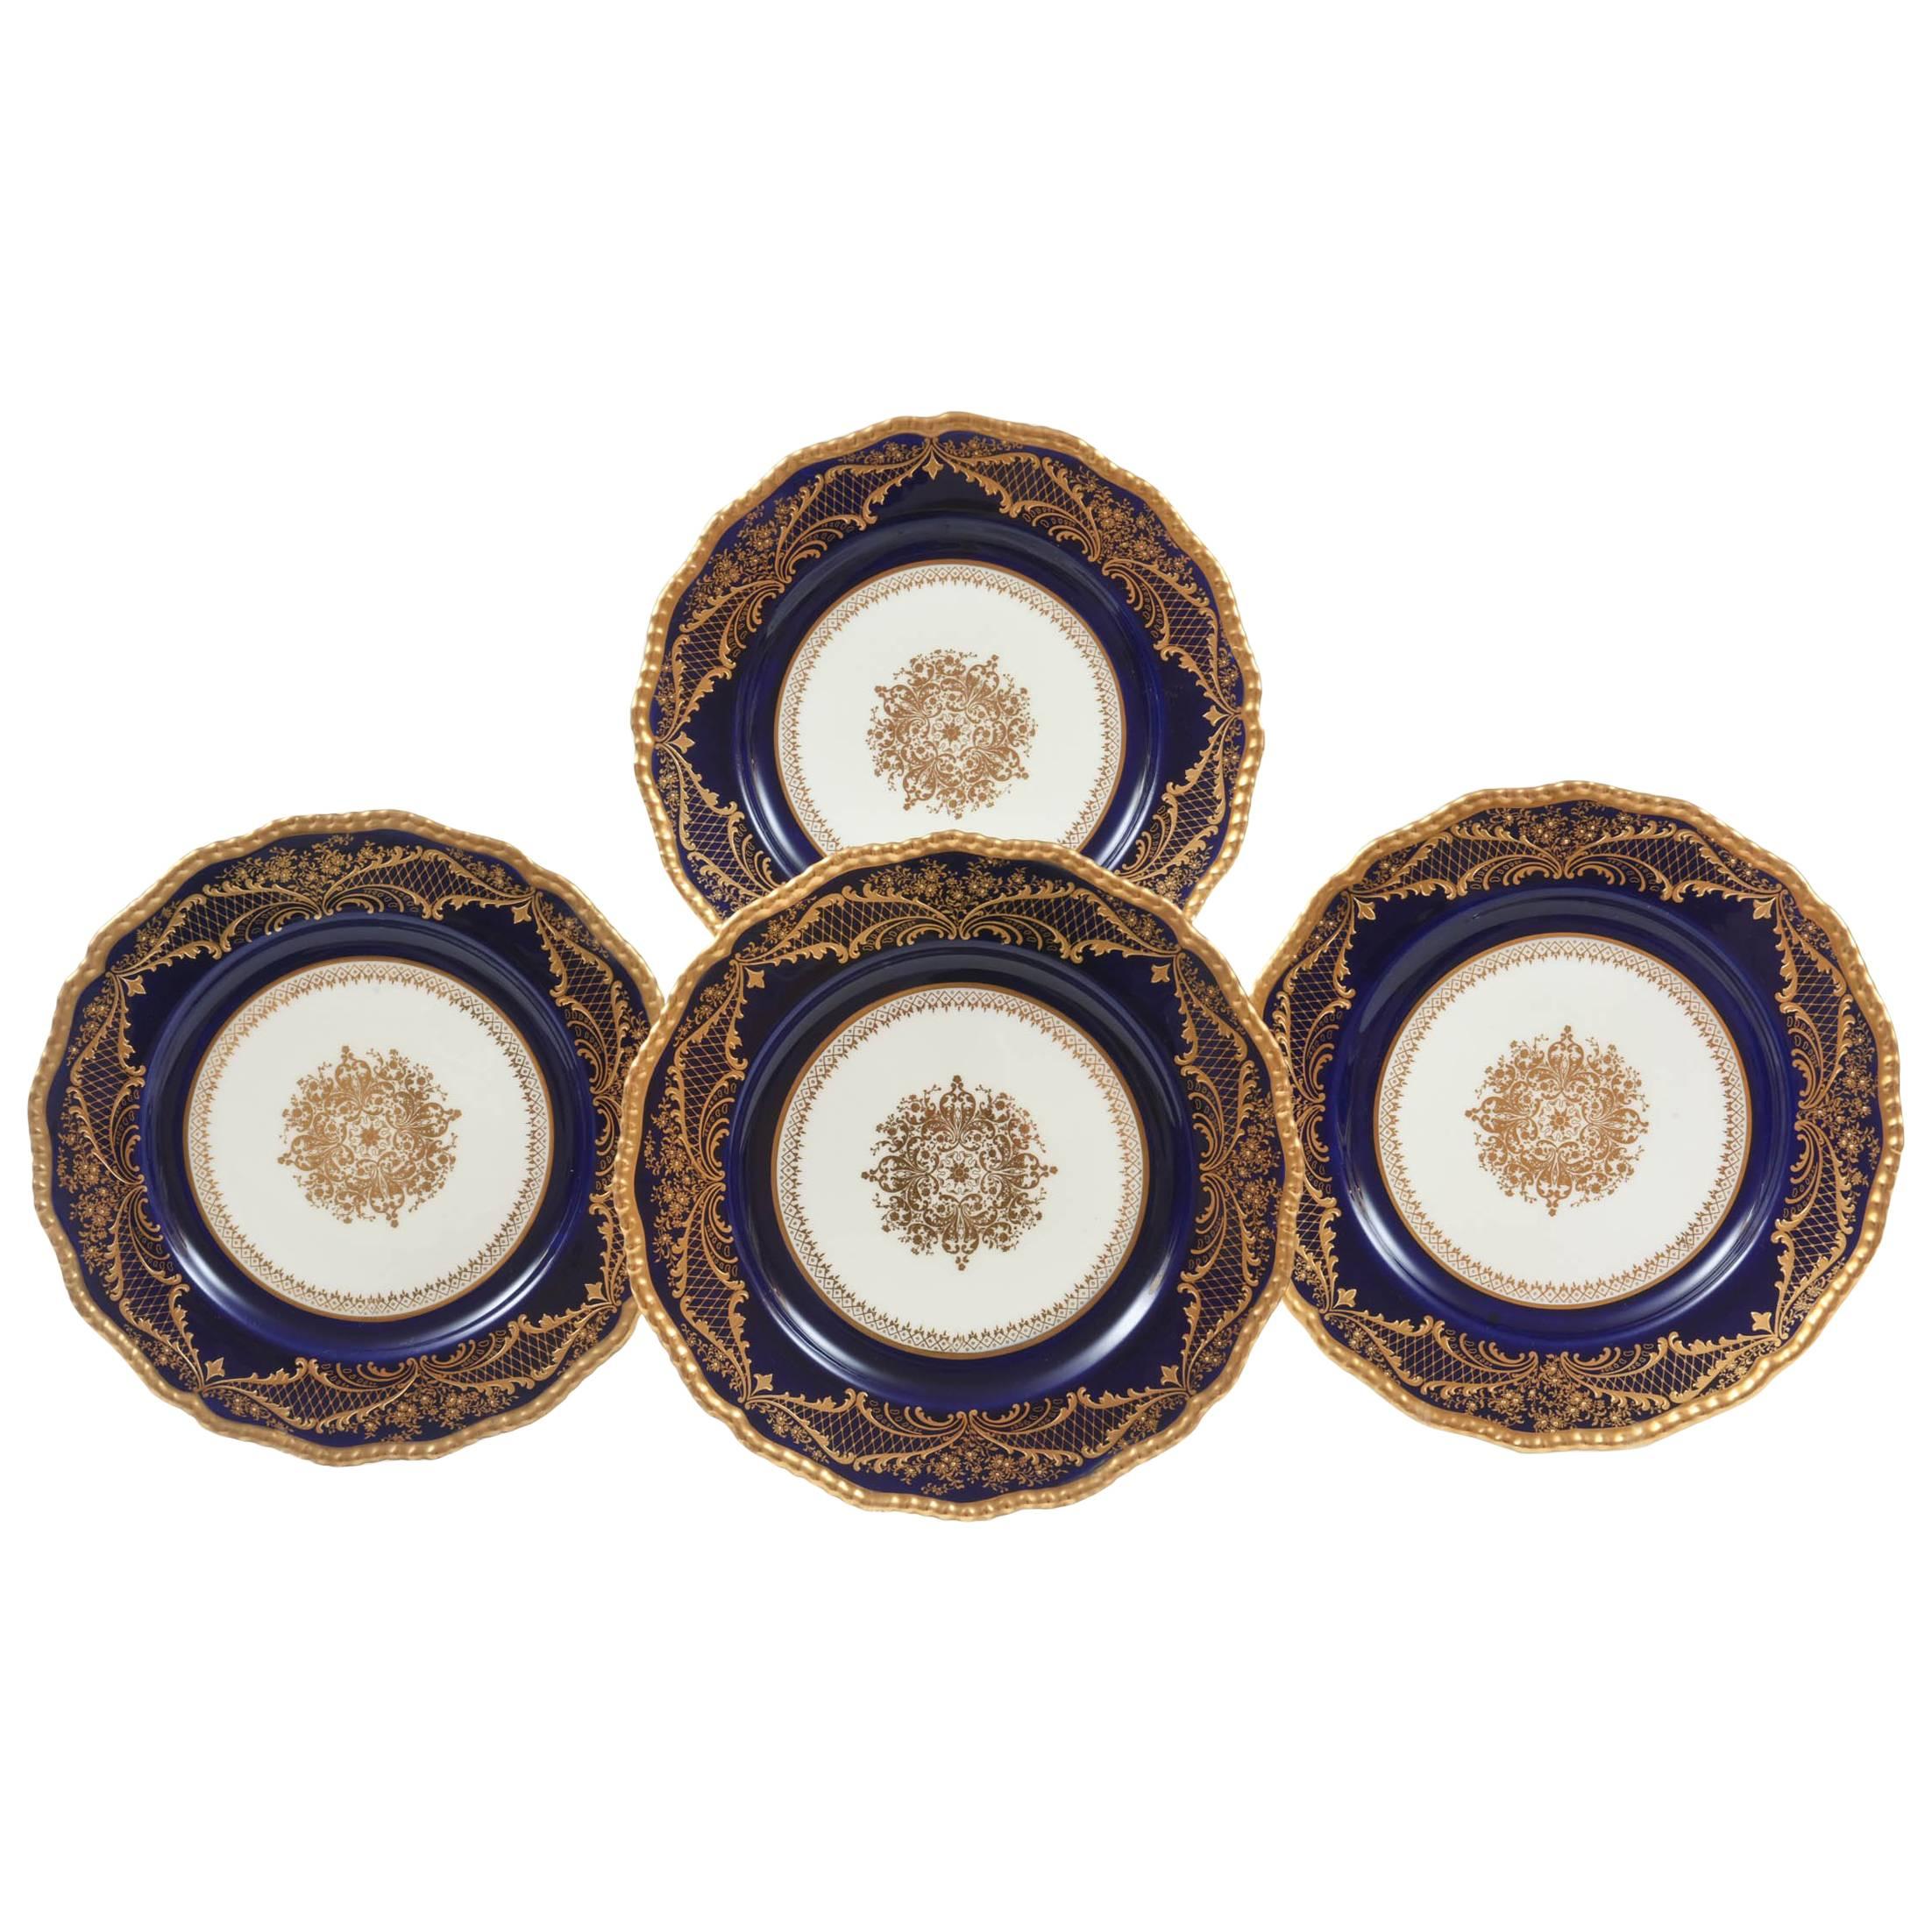 12 Stunning Cobalt Blue Gilt Encrusted Dinner or Presentation Plates, Medallion